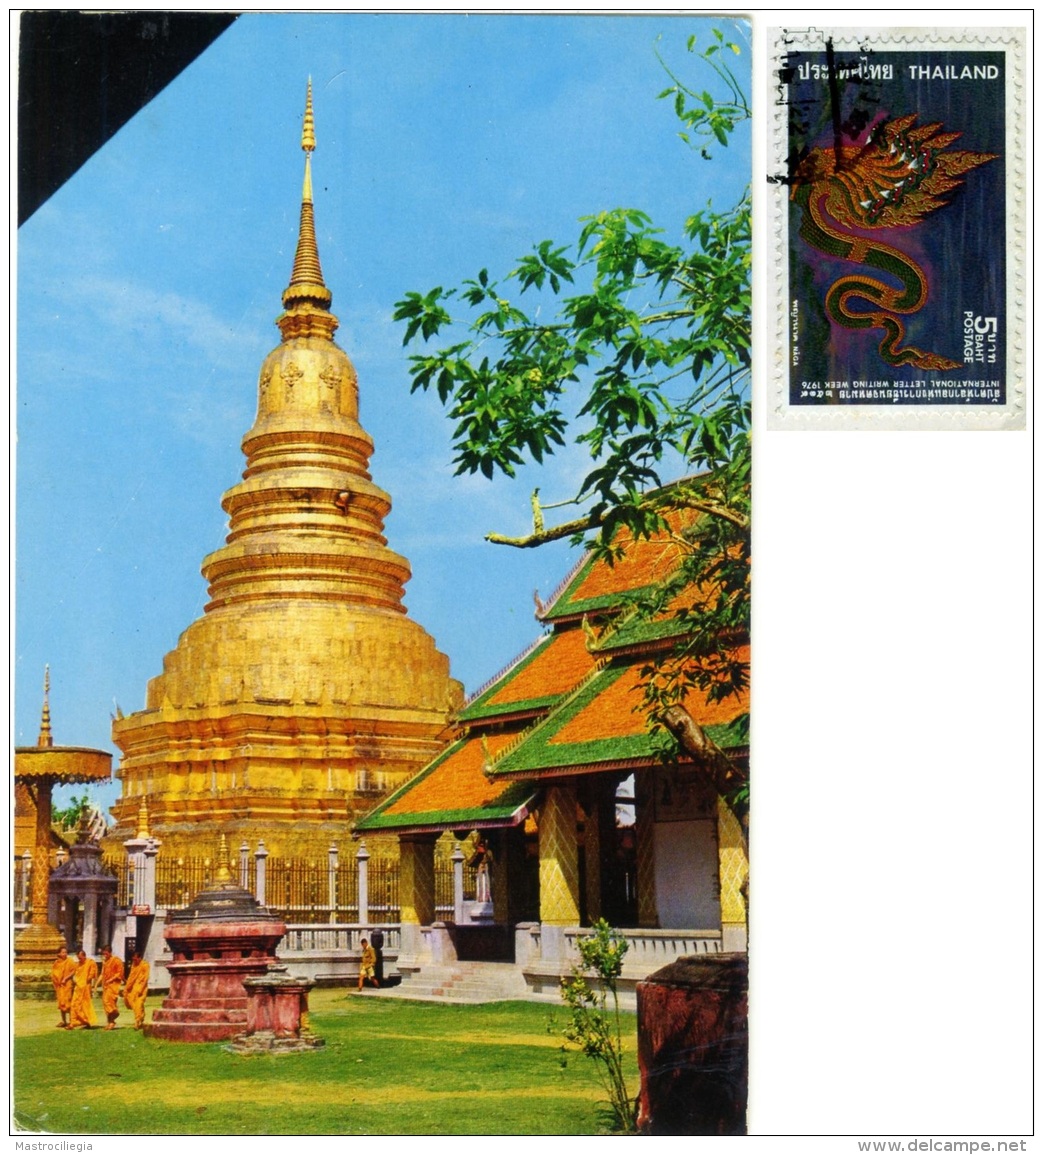 THAILAND  TAILANDIA  LAMPOON  Lamphun  Wat Phrathat-Hariphoon-chai   Nice Stamp - Tailandia